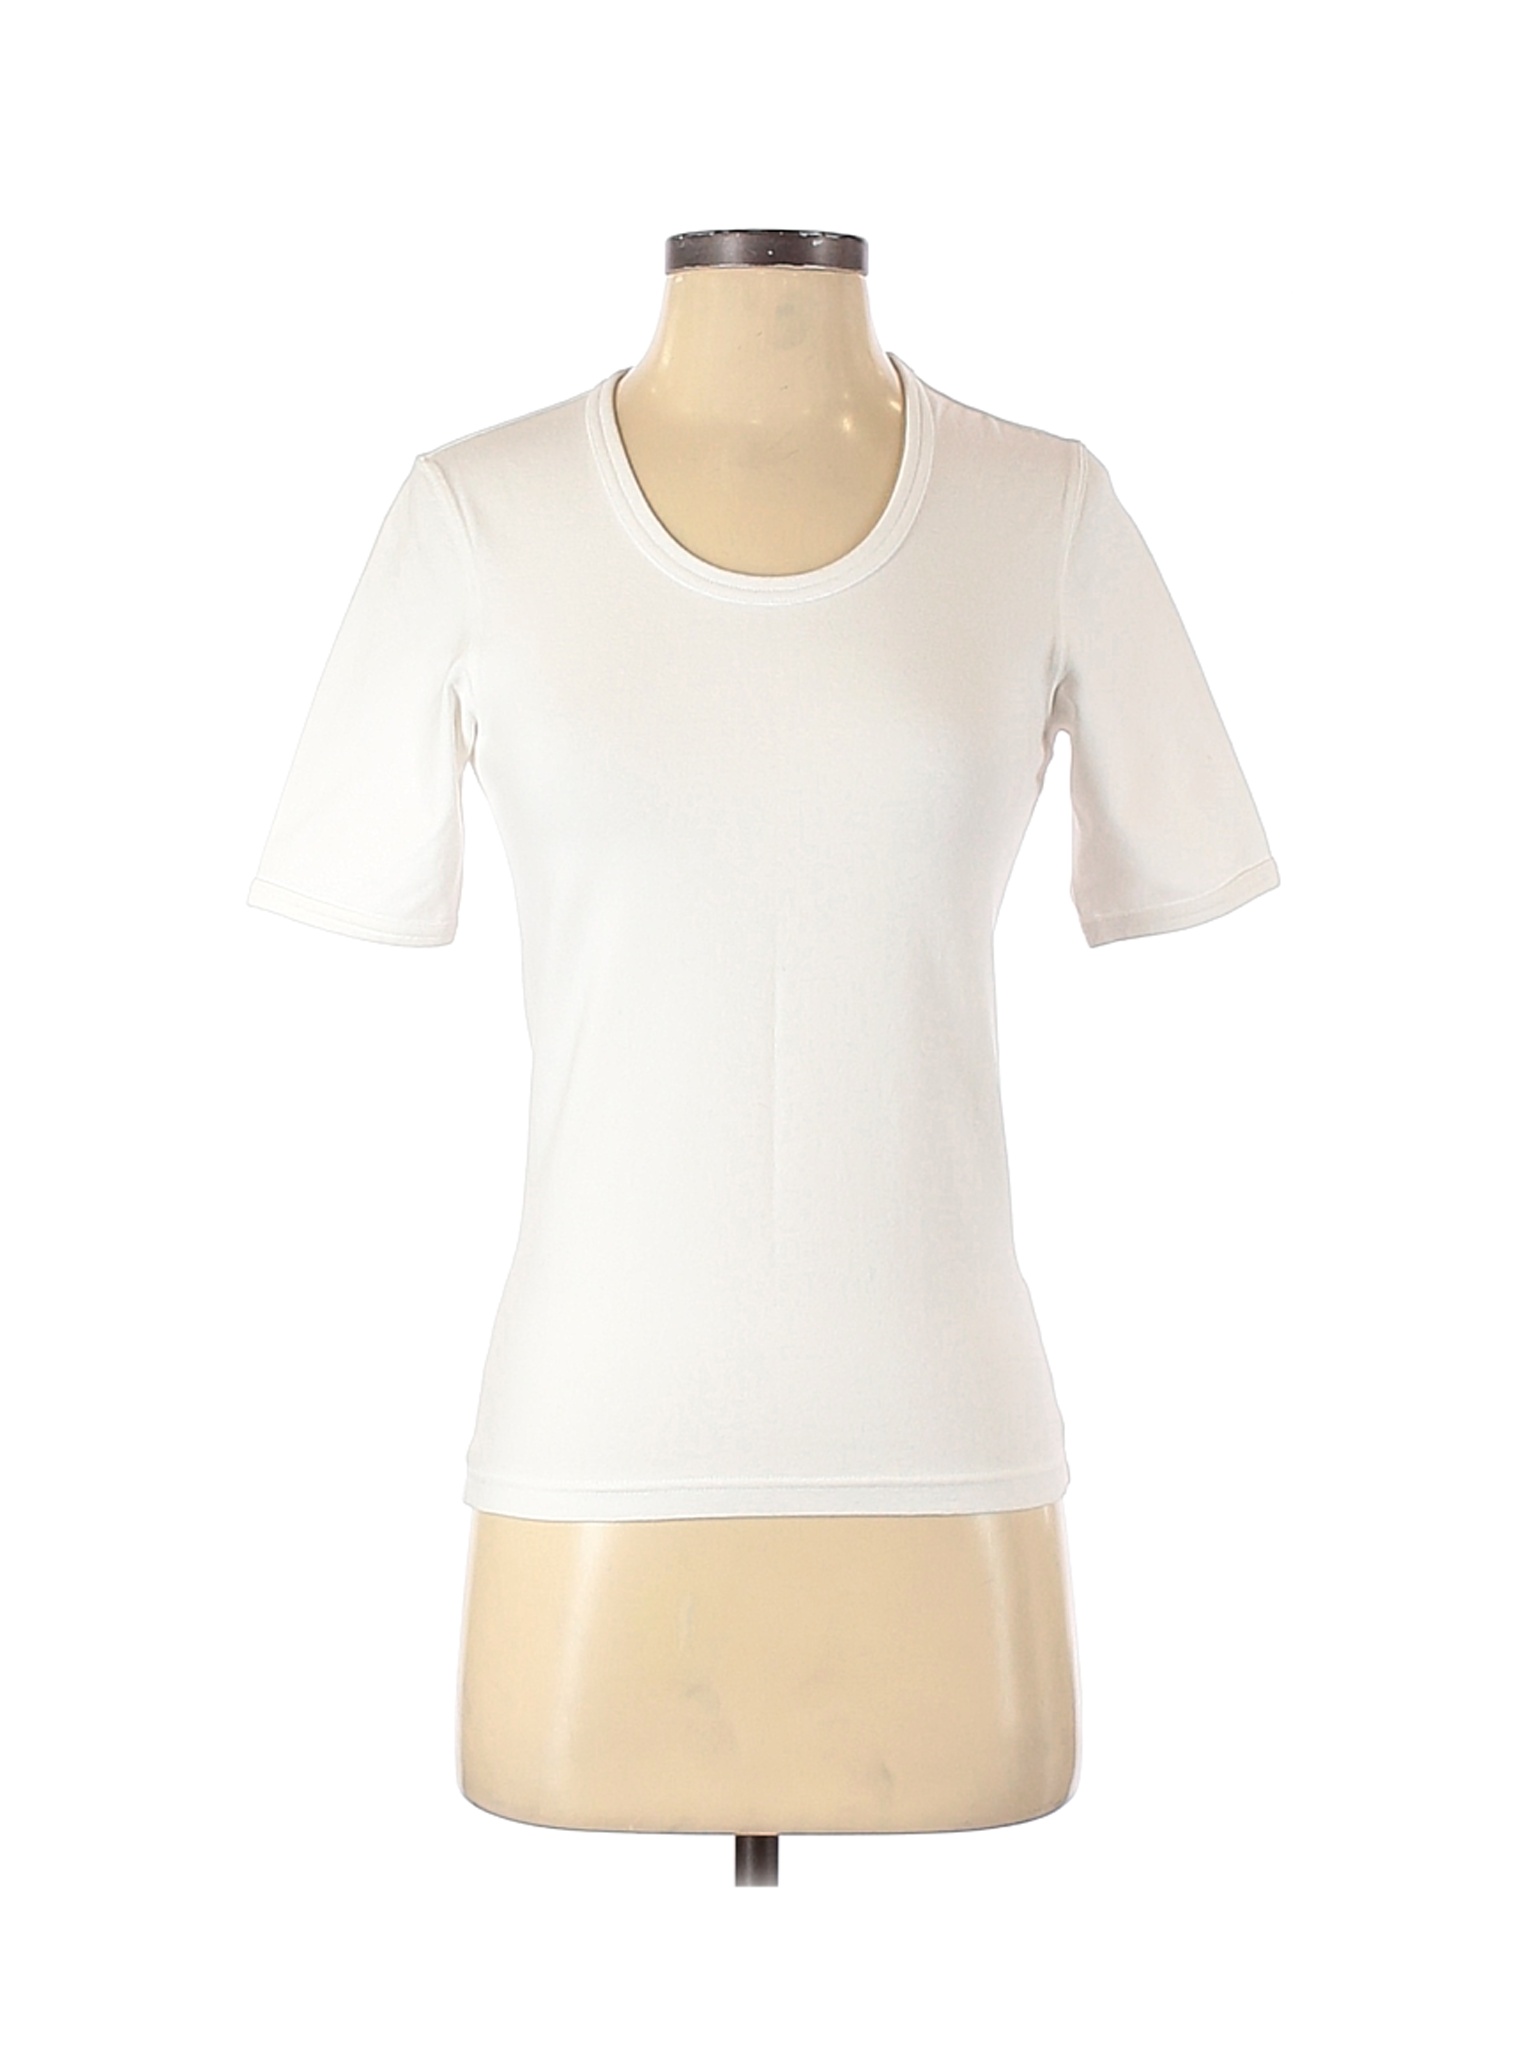 Uniqlo U Women White Short Sleeve T-Shirt S | eBay